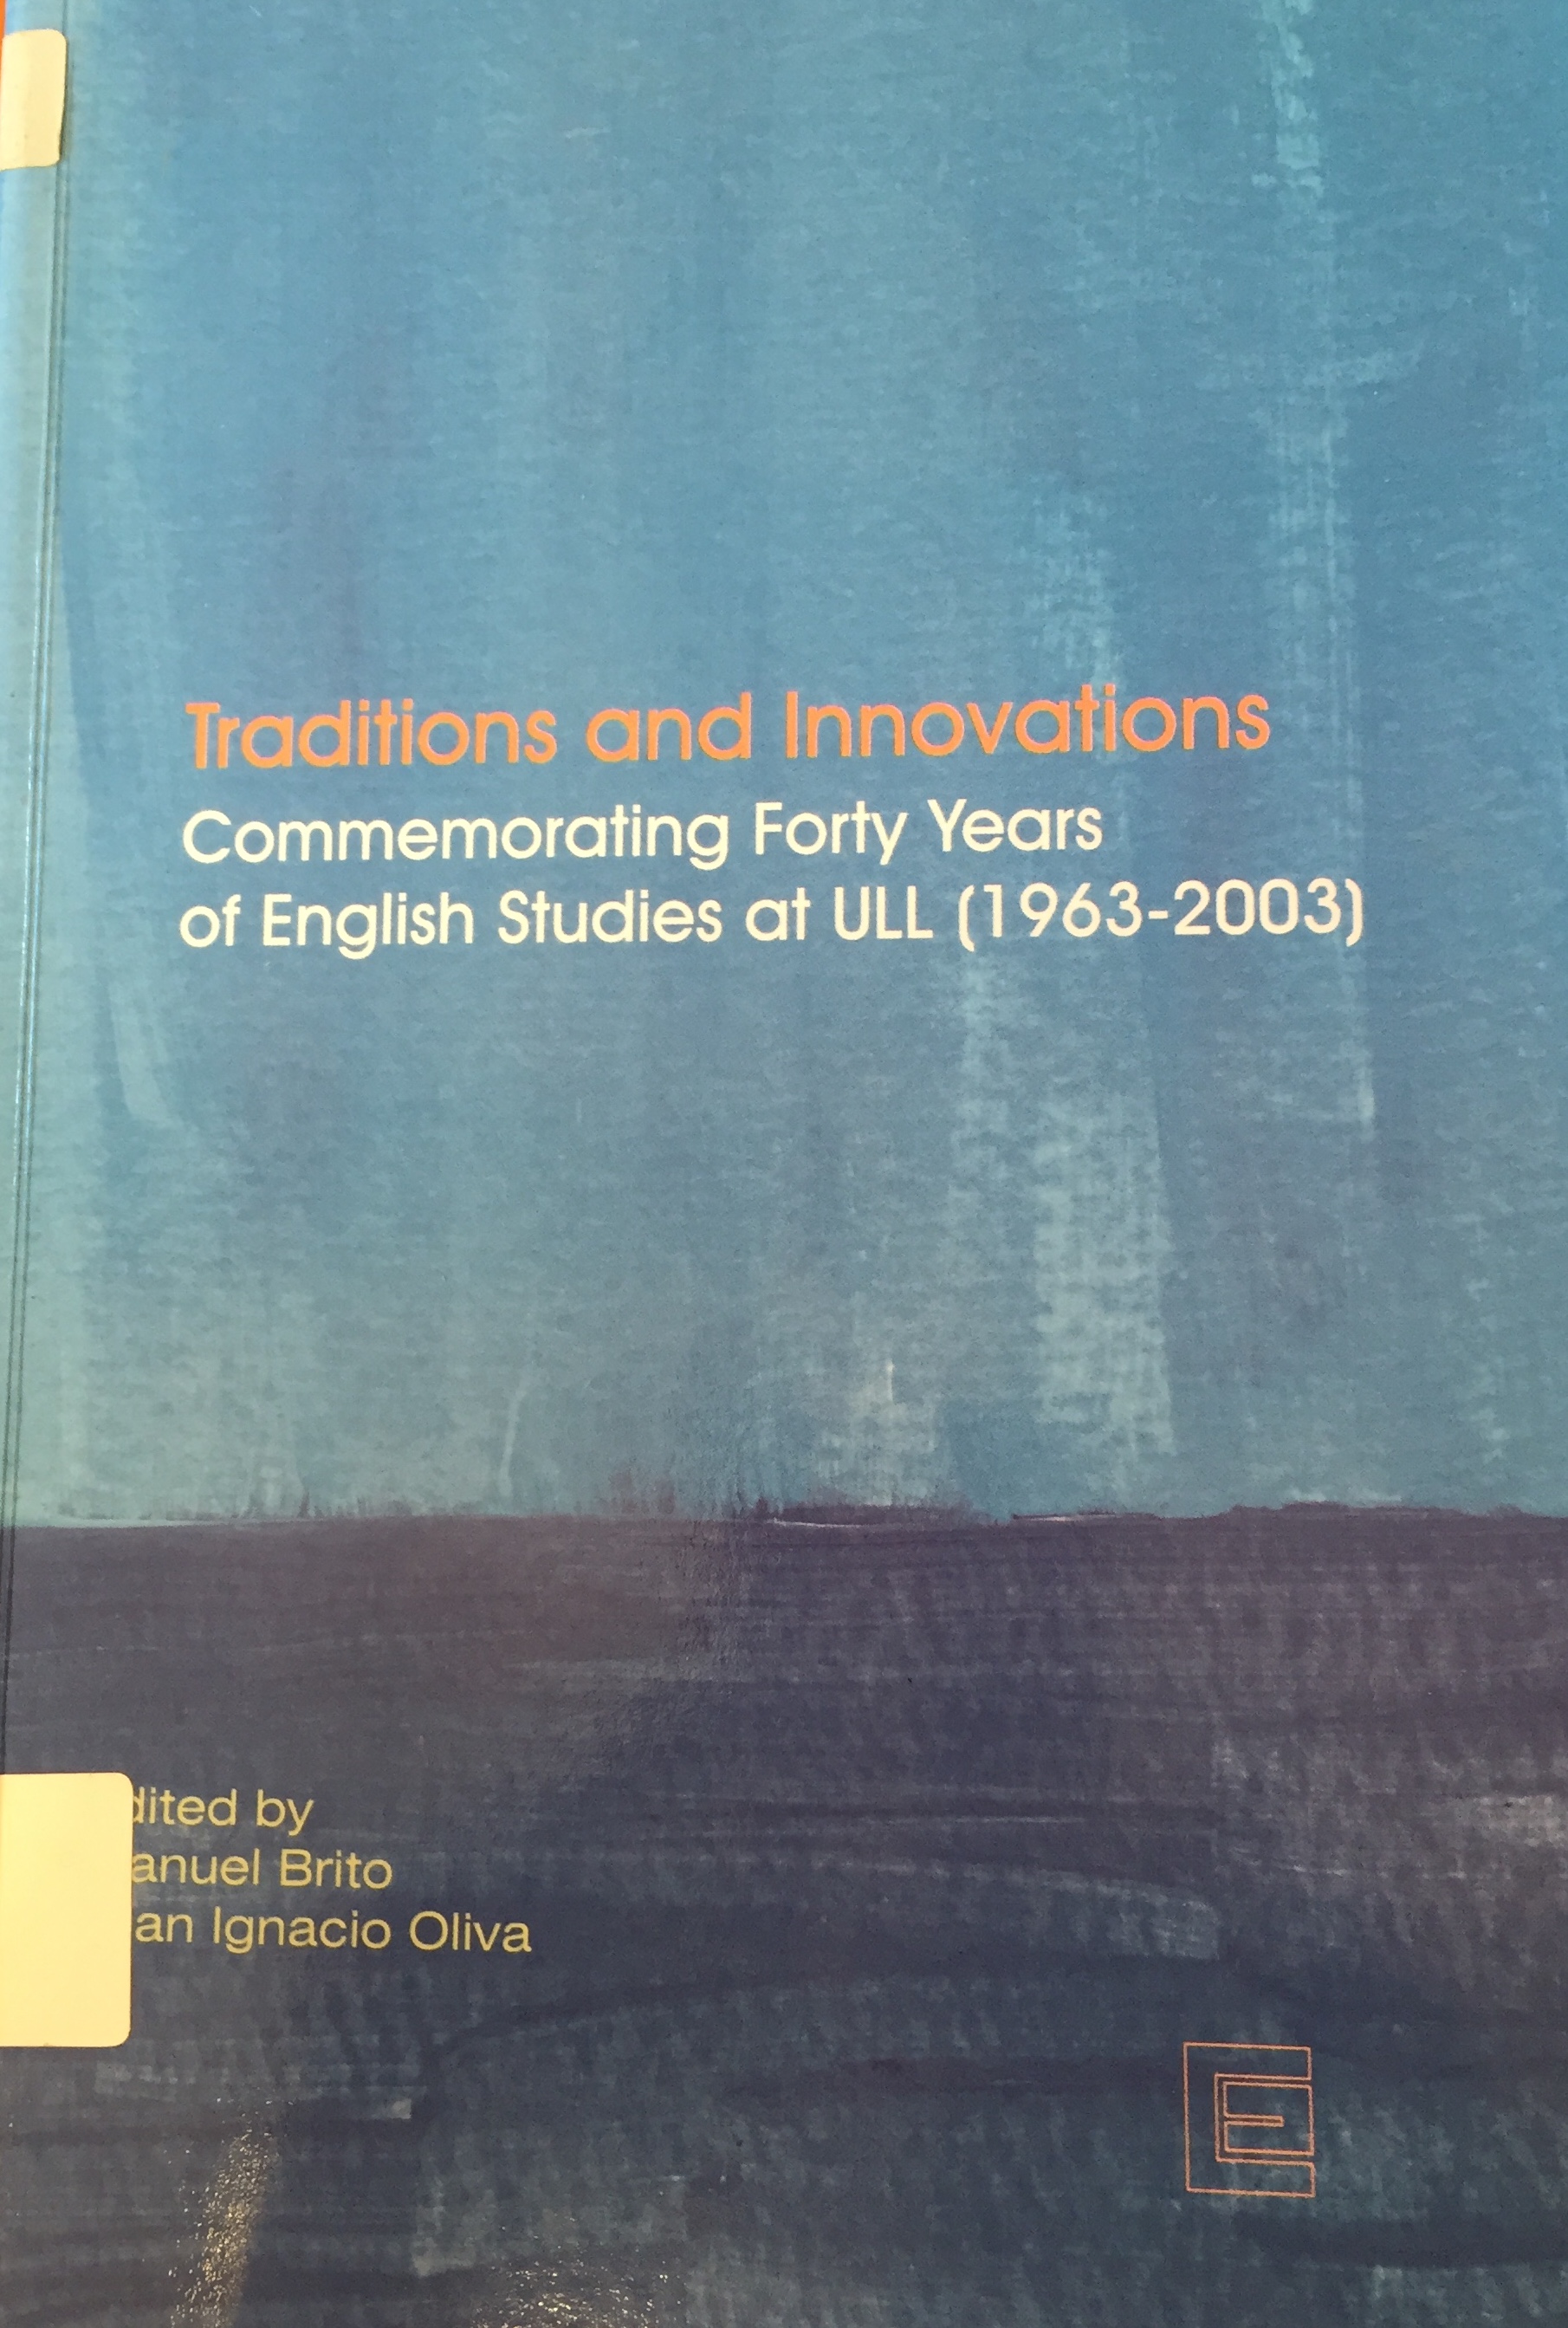 Imagen de portada del libro Traditions and innovations